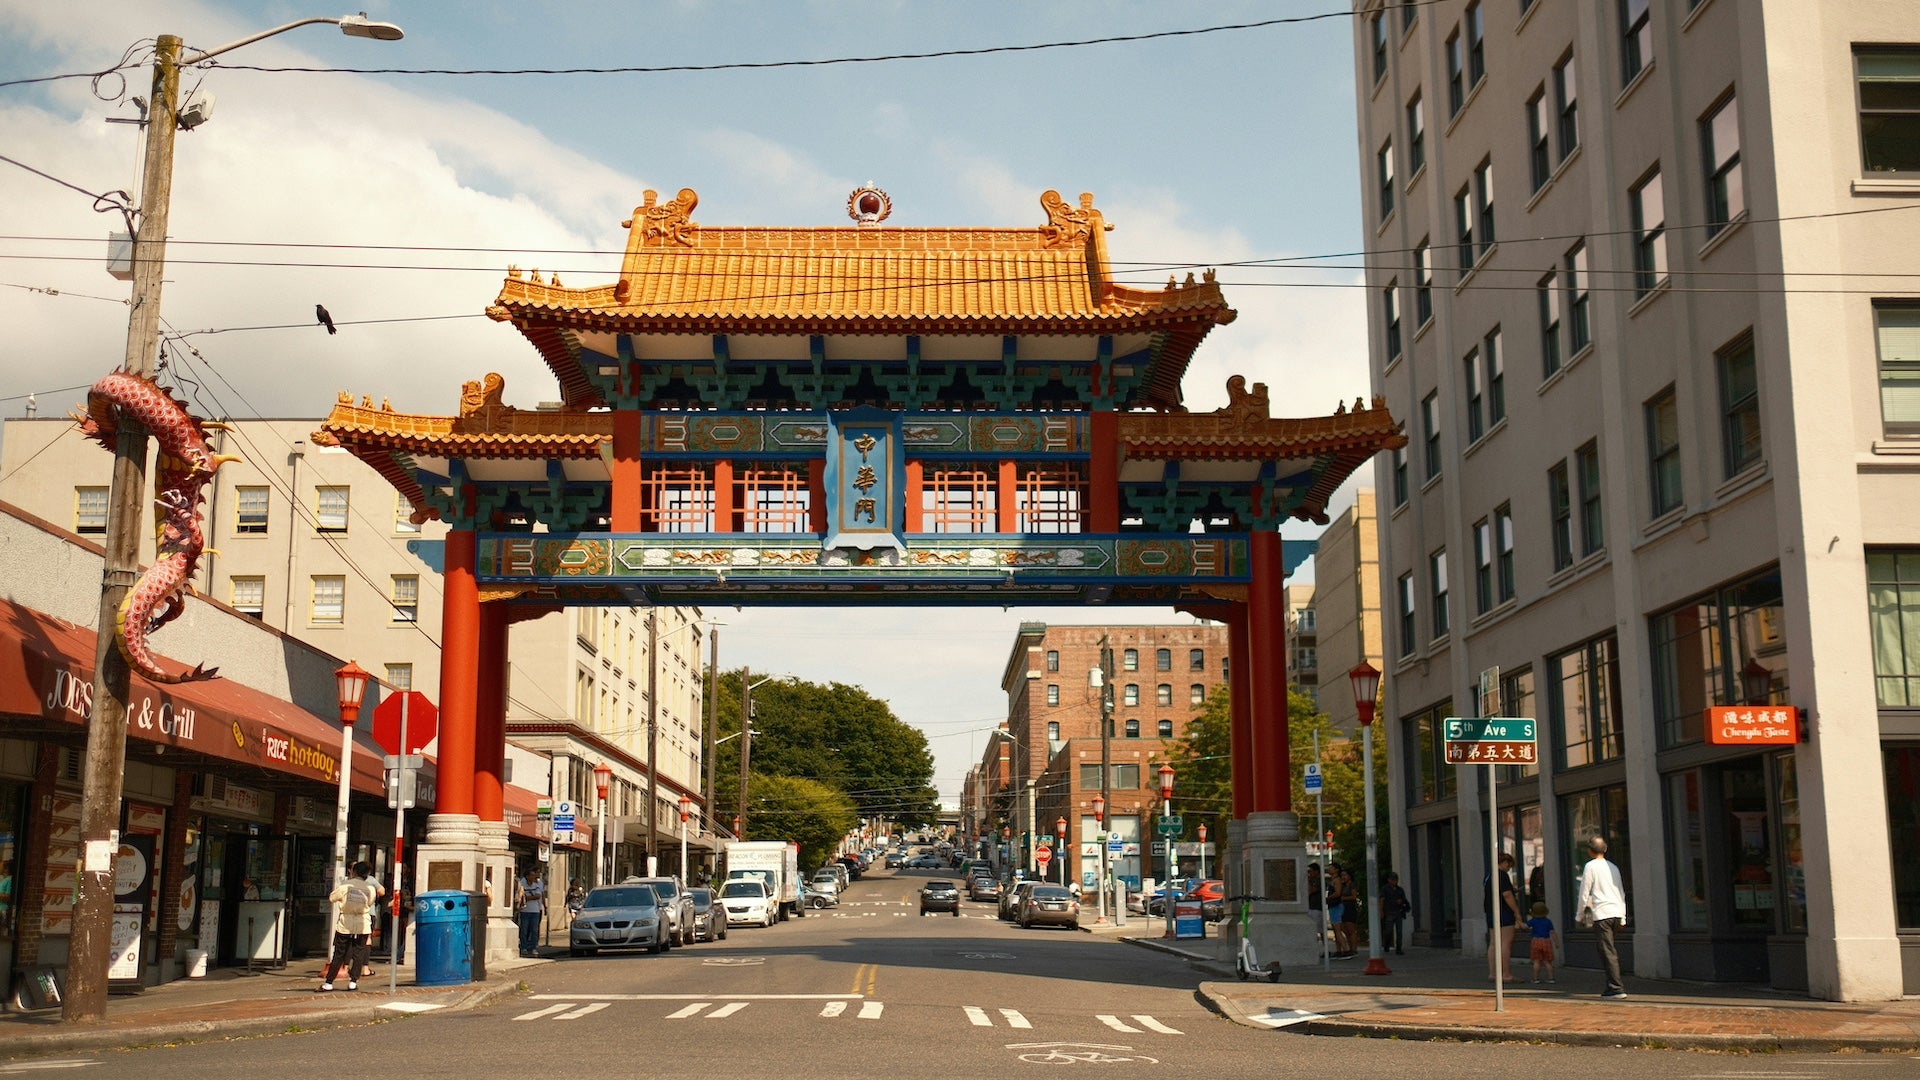 Large asian gate in an urban setting